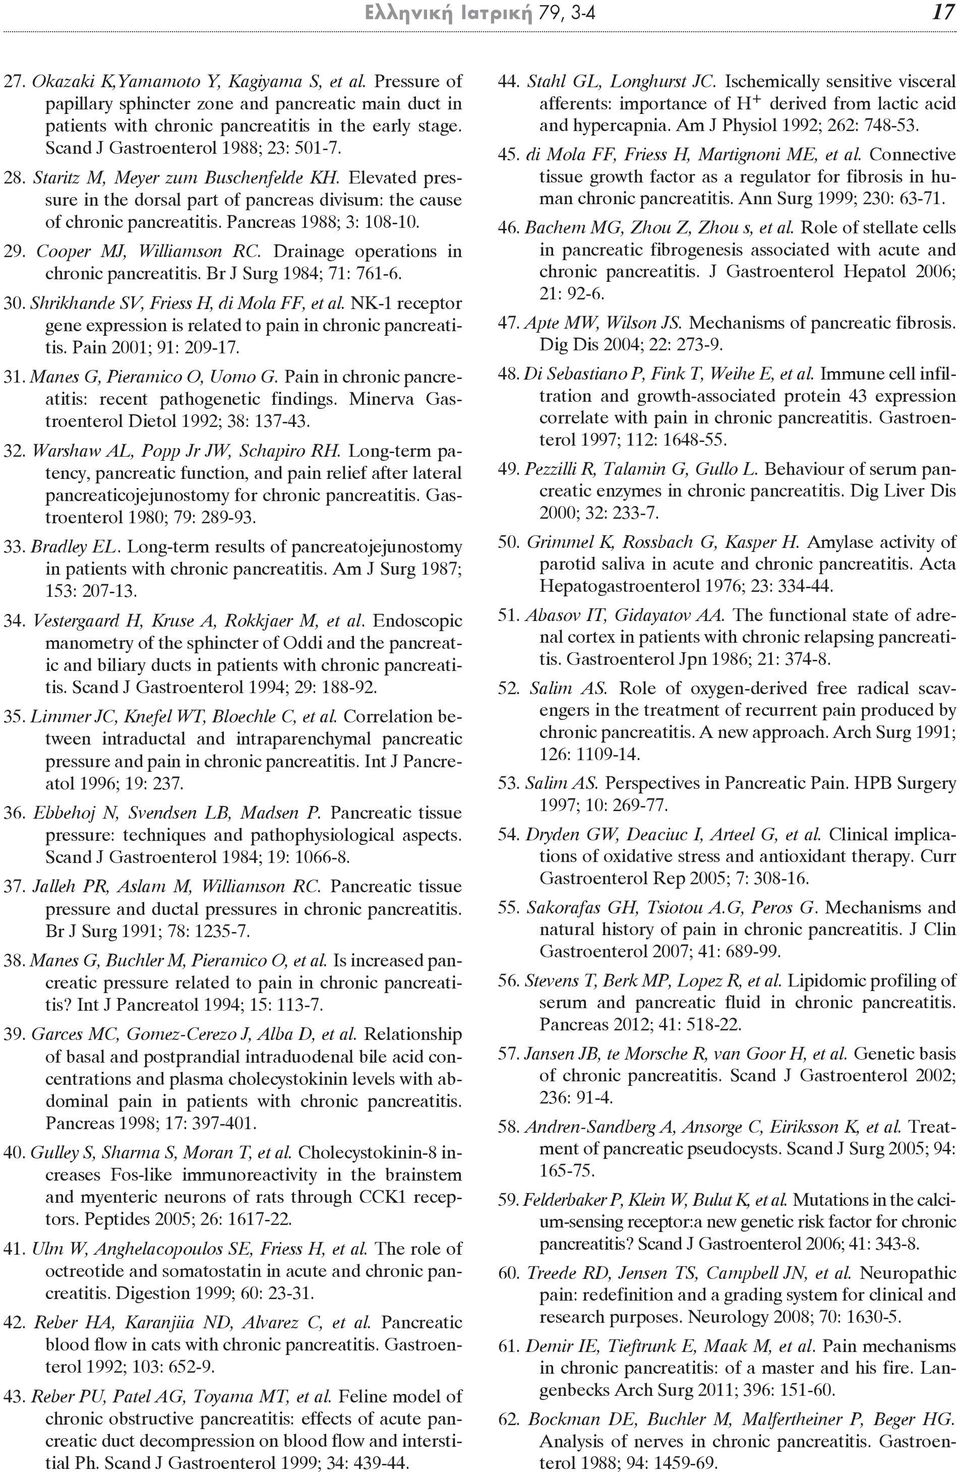 29. Cooper MJ, Williamson RC. Drainage operations in chronic pancreatitis. Br J Surg 1984; 71: 761-6. 30. Shrikhande SV, Friess H, di Mola FF, et al.